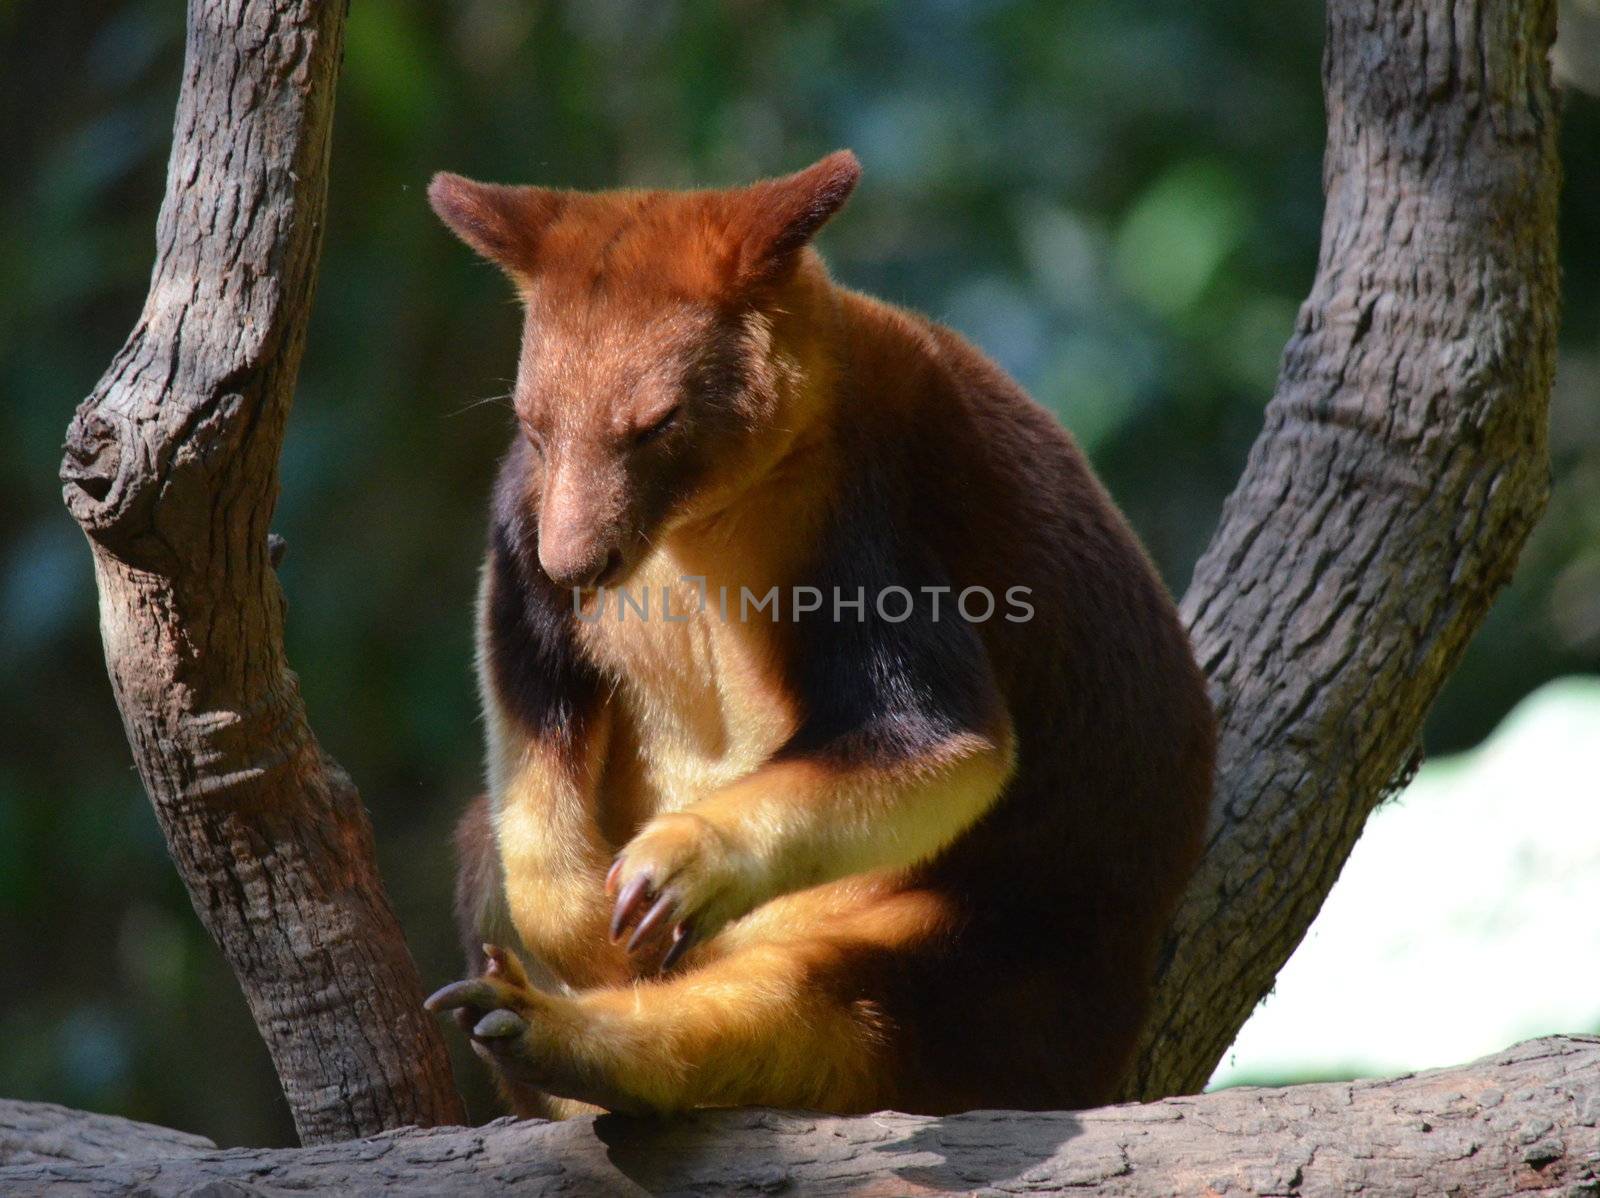 Australian Tree Kangaroo by KirbyWalkerPhotos